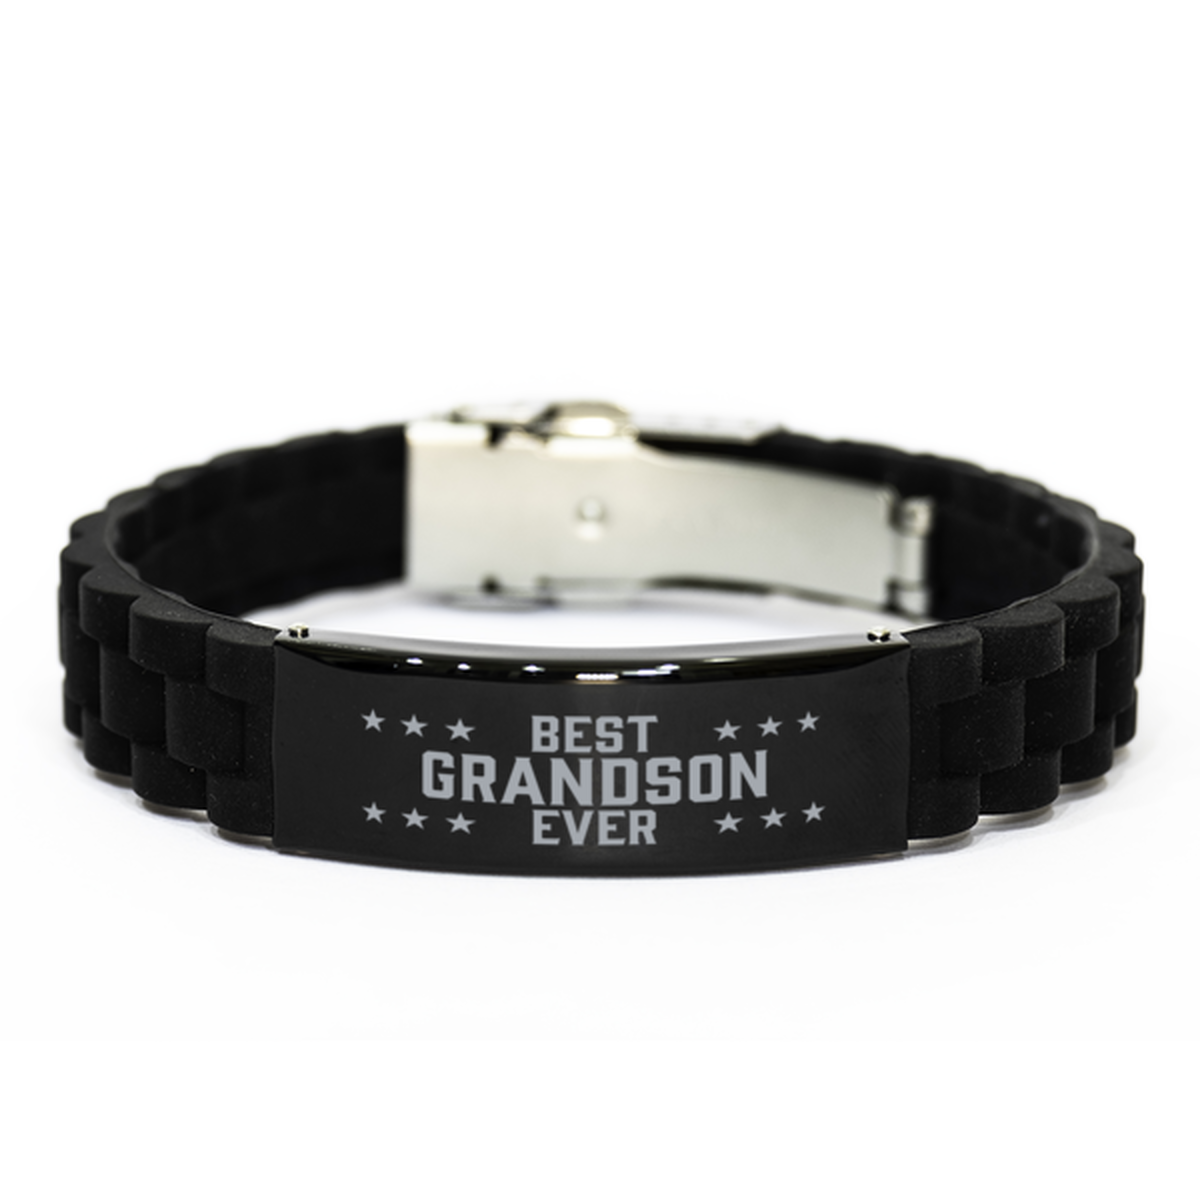 Best Grandson Ever Grandson Gifts, Funny Black Engraved Bracelet For Grandson, Family Gifts For Men